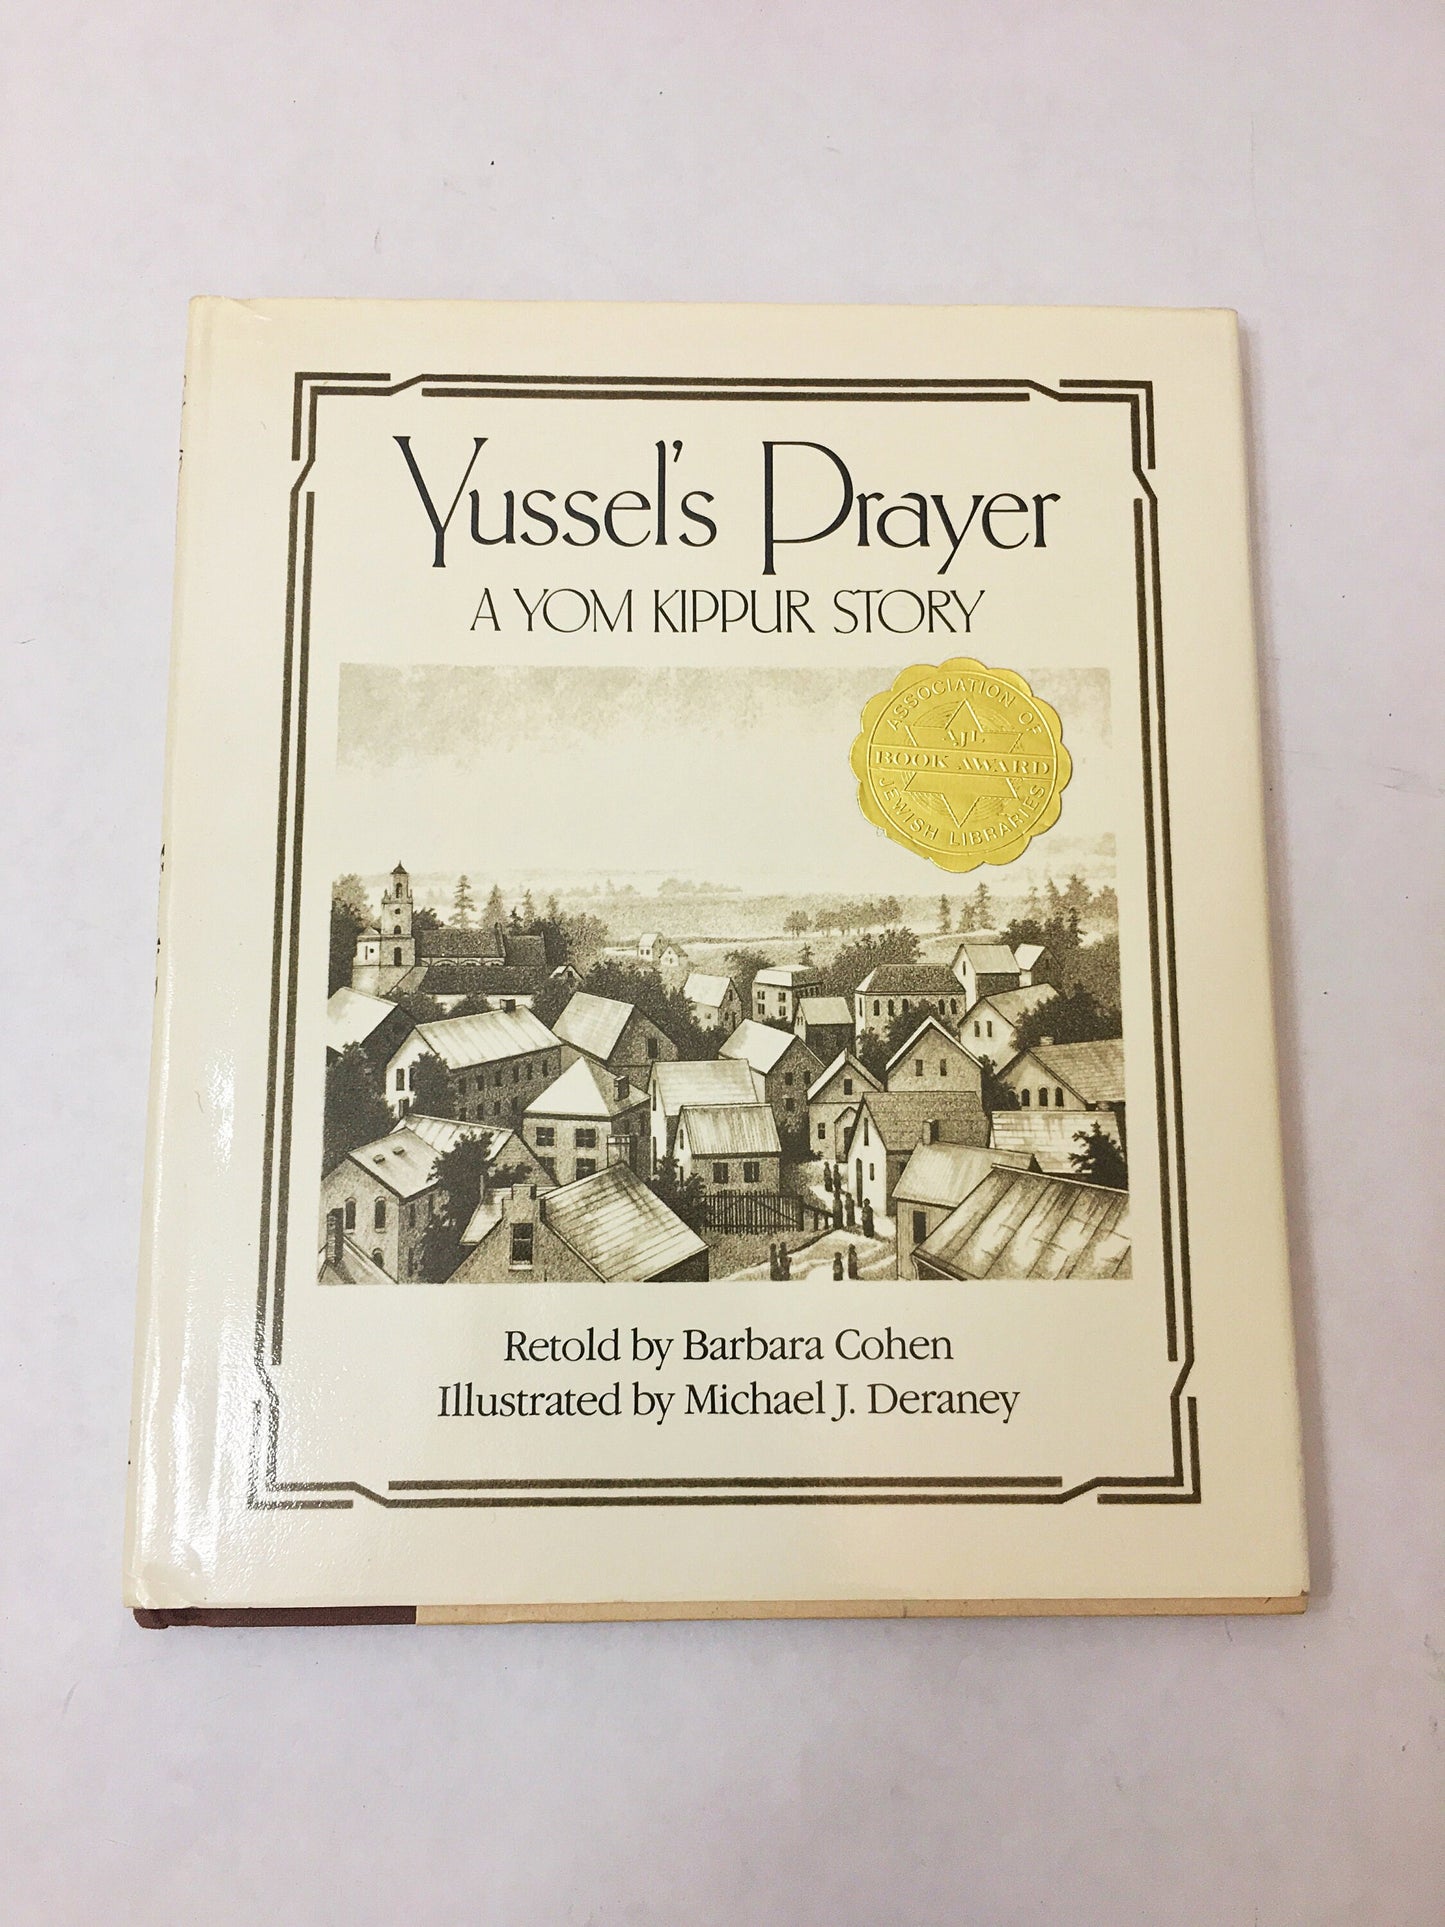 Yussel's Prayer Yom Kippur Story Vintage book circa 1981 by Barbara Cohen. Jewish High Holy Day literature. Rabbinic tale of an orphan